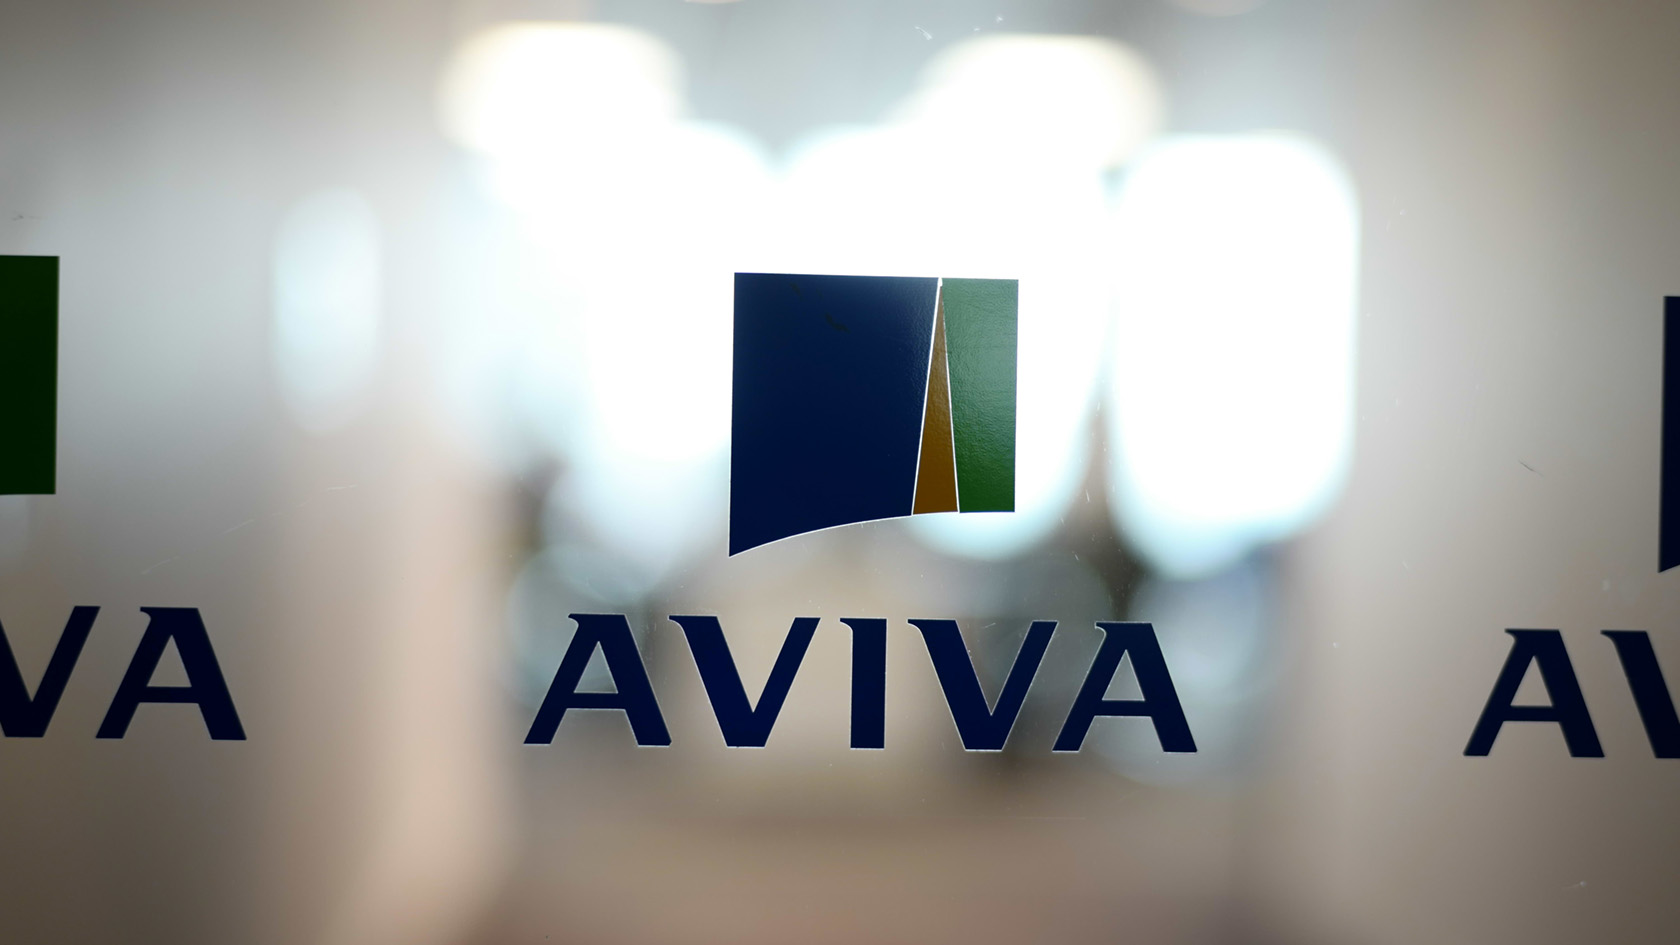 Aviva logo on office glass window